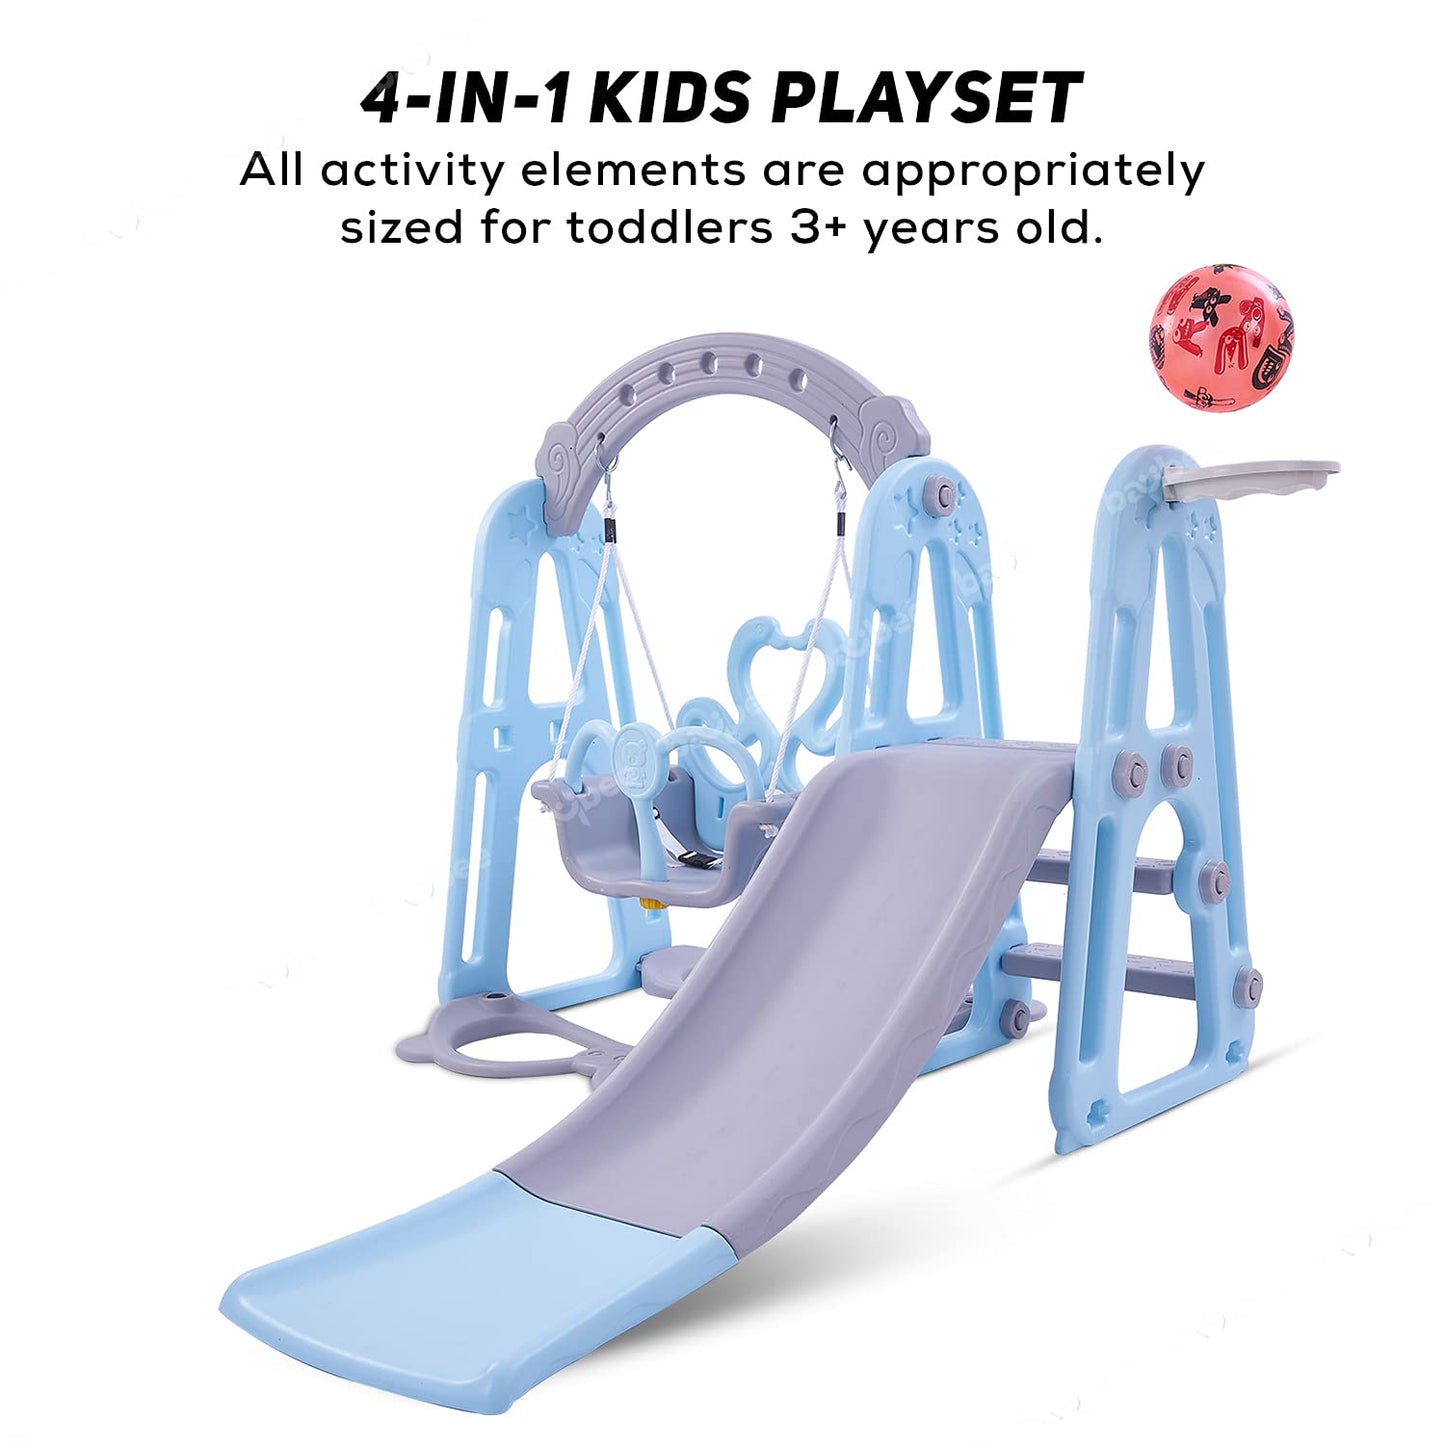 Twinkle 4 in 1 Swing and Slider Foldable Baby Garden Slide for Kids